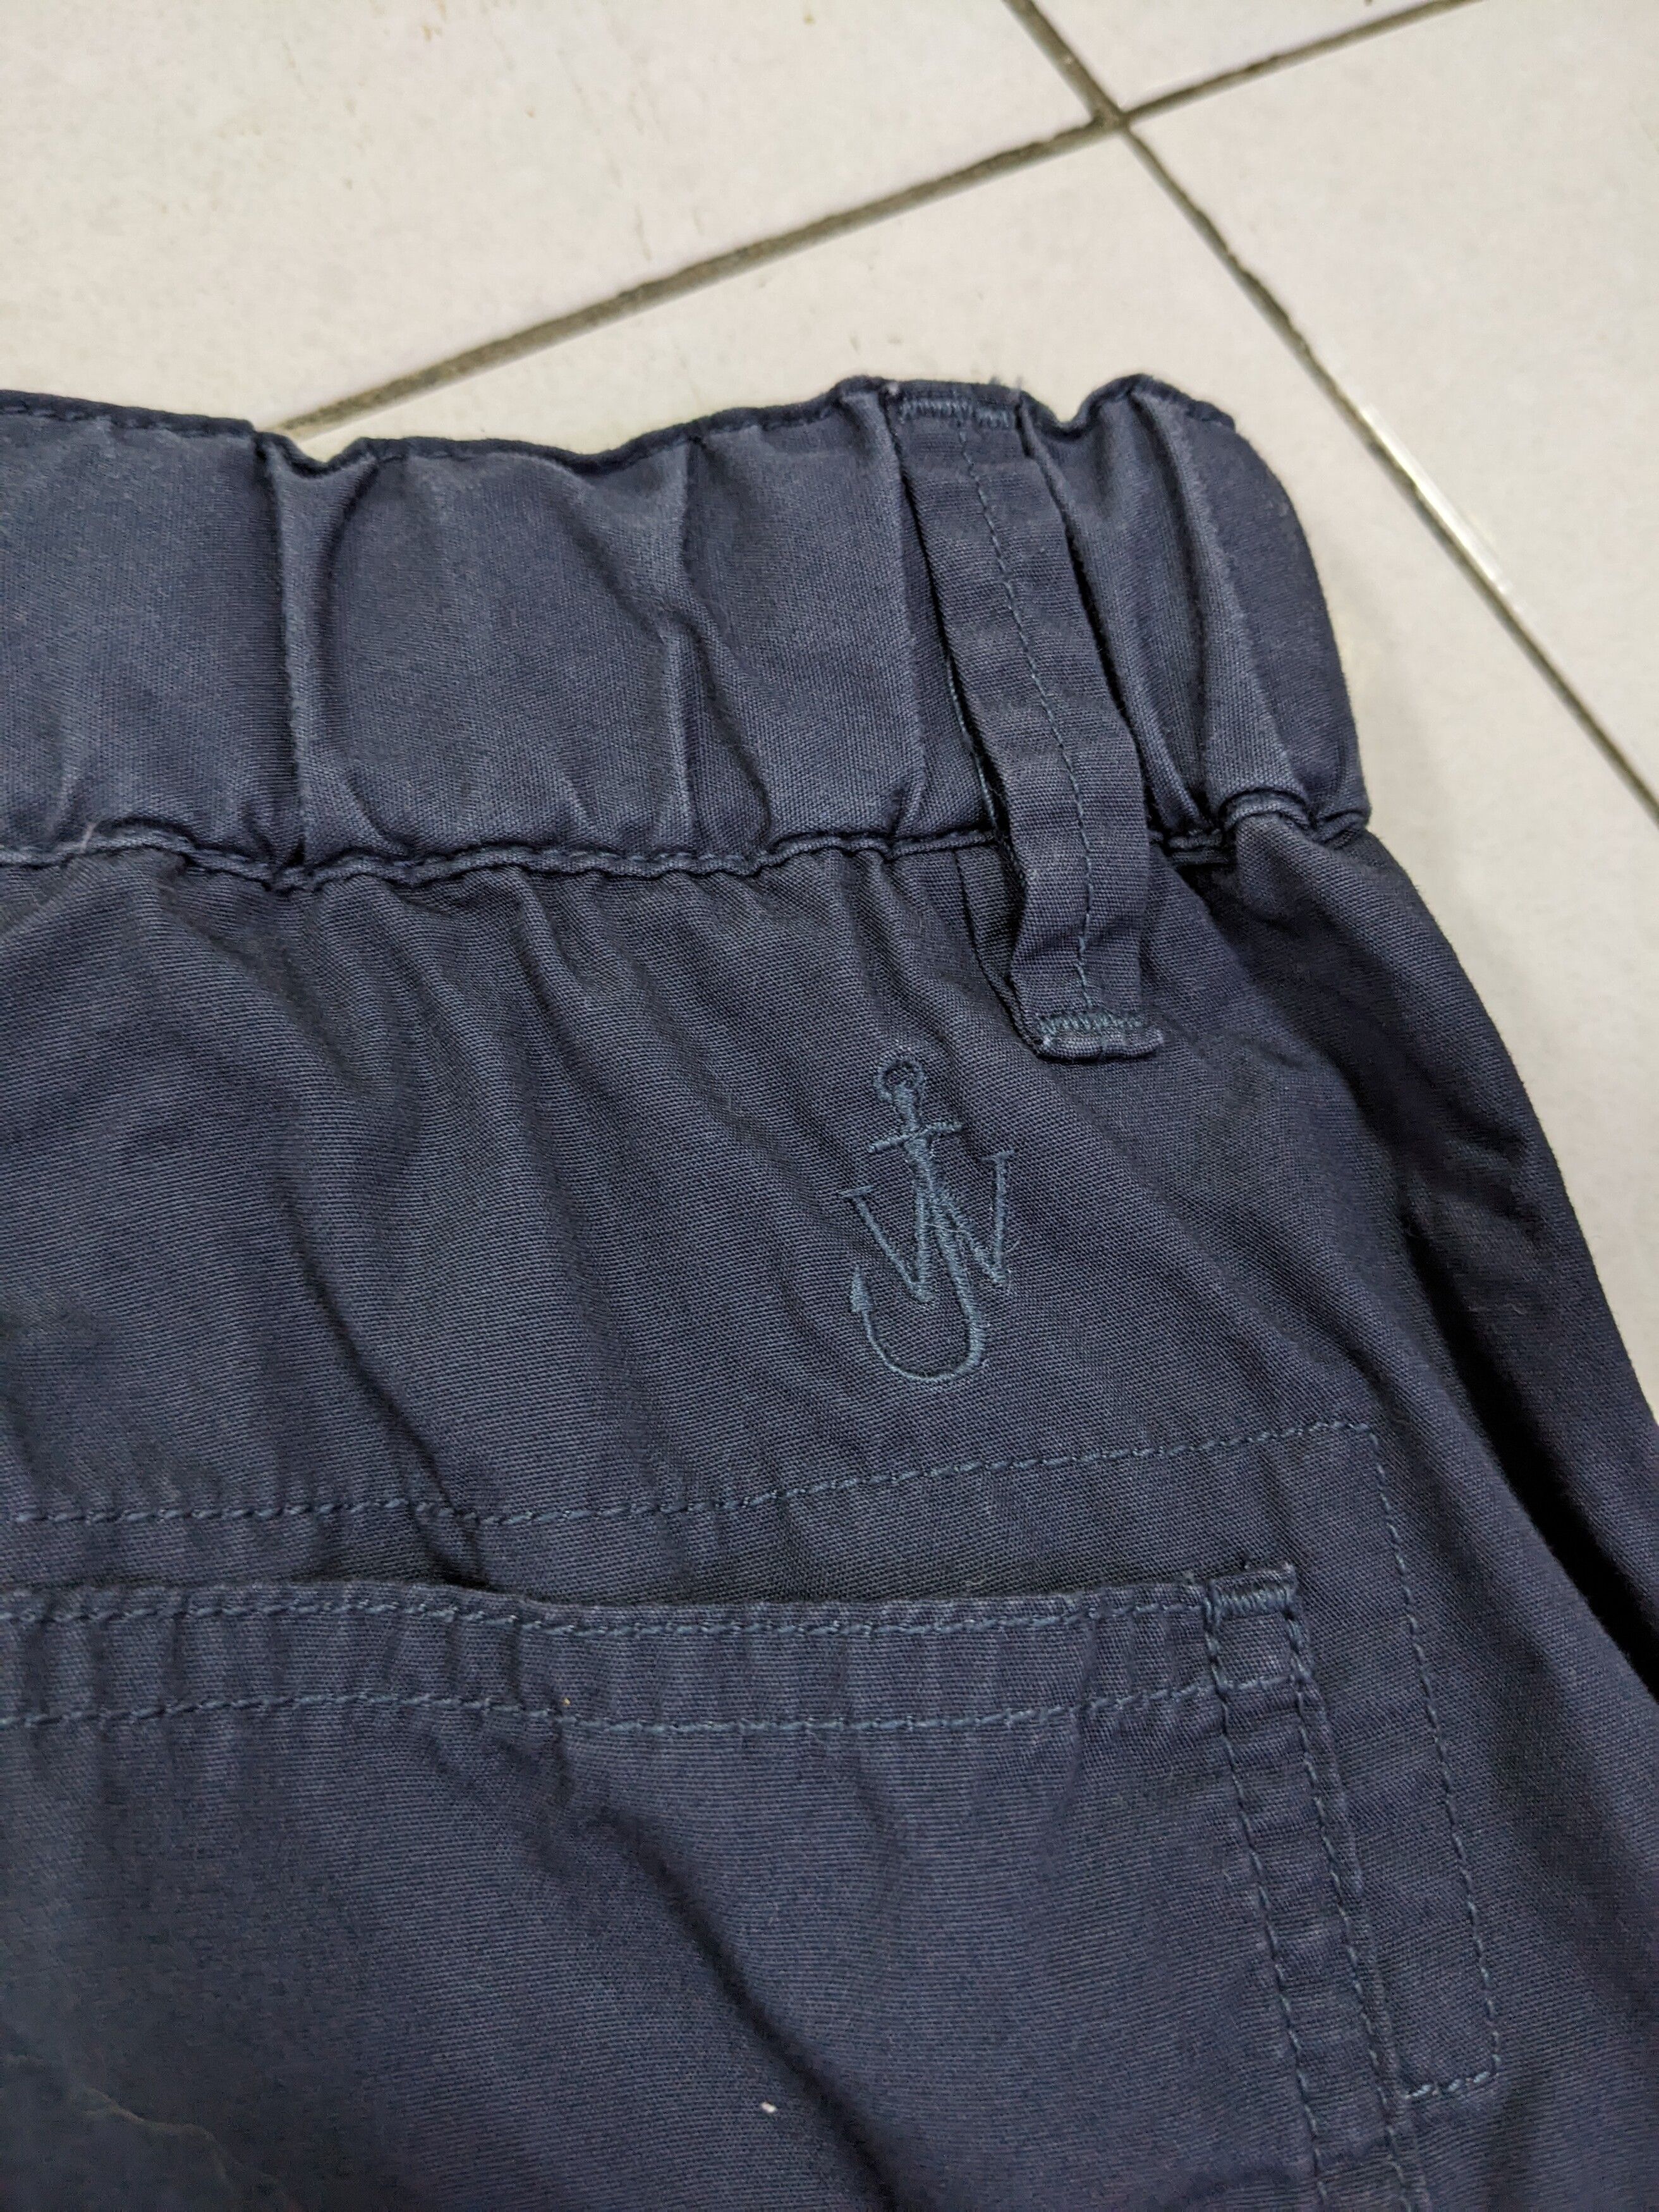 Uniqlo JW Anderson Casual Pants Drawstring Navy Blue - 5